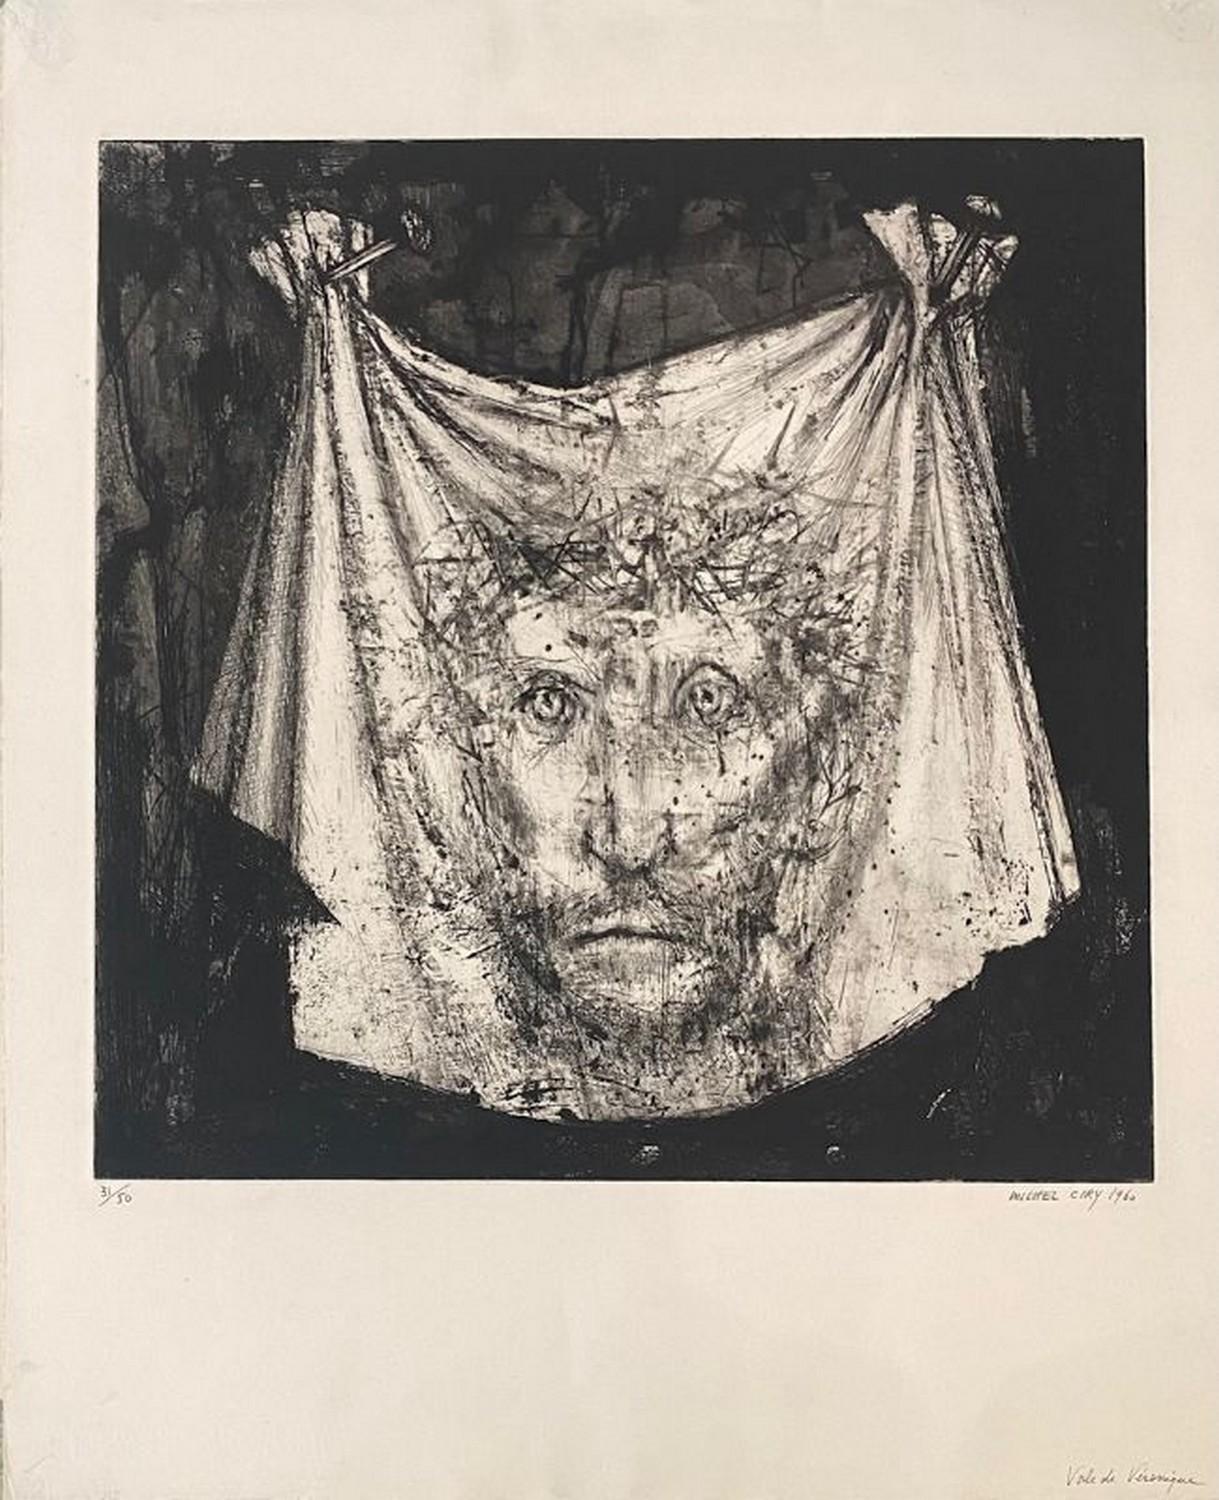 Michel Ciry Abstract Print - Veronique's veil